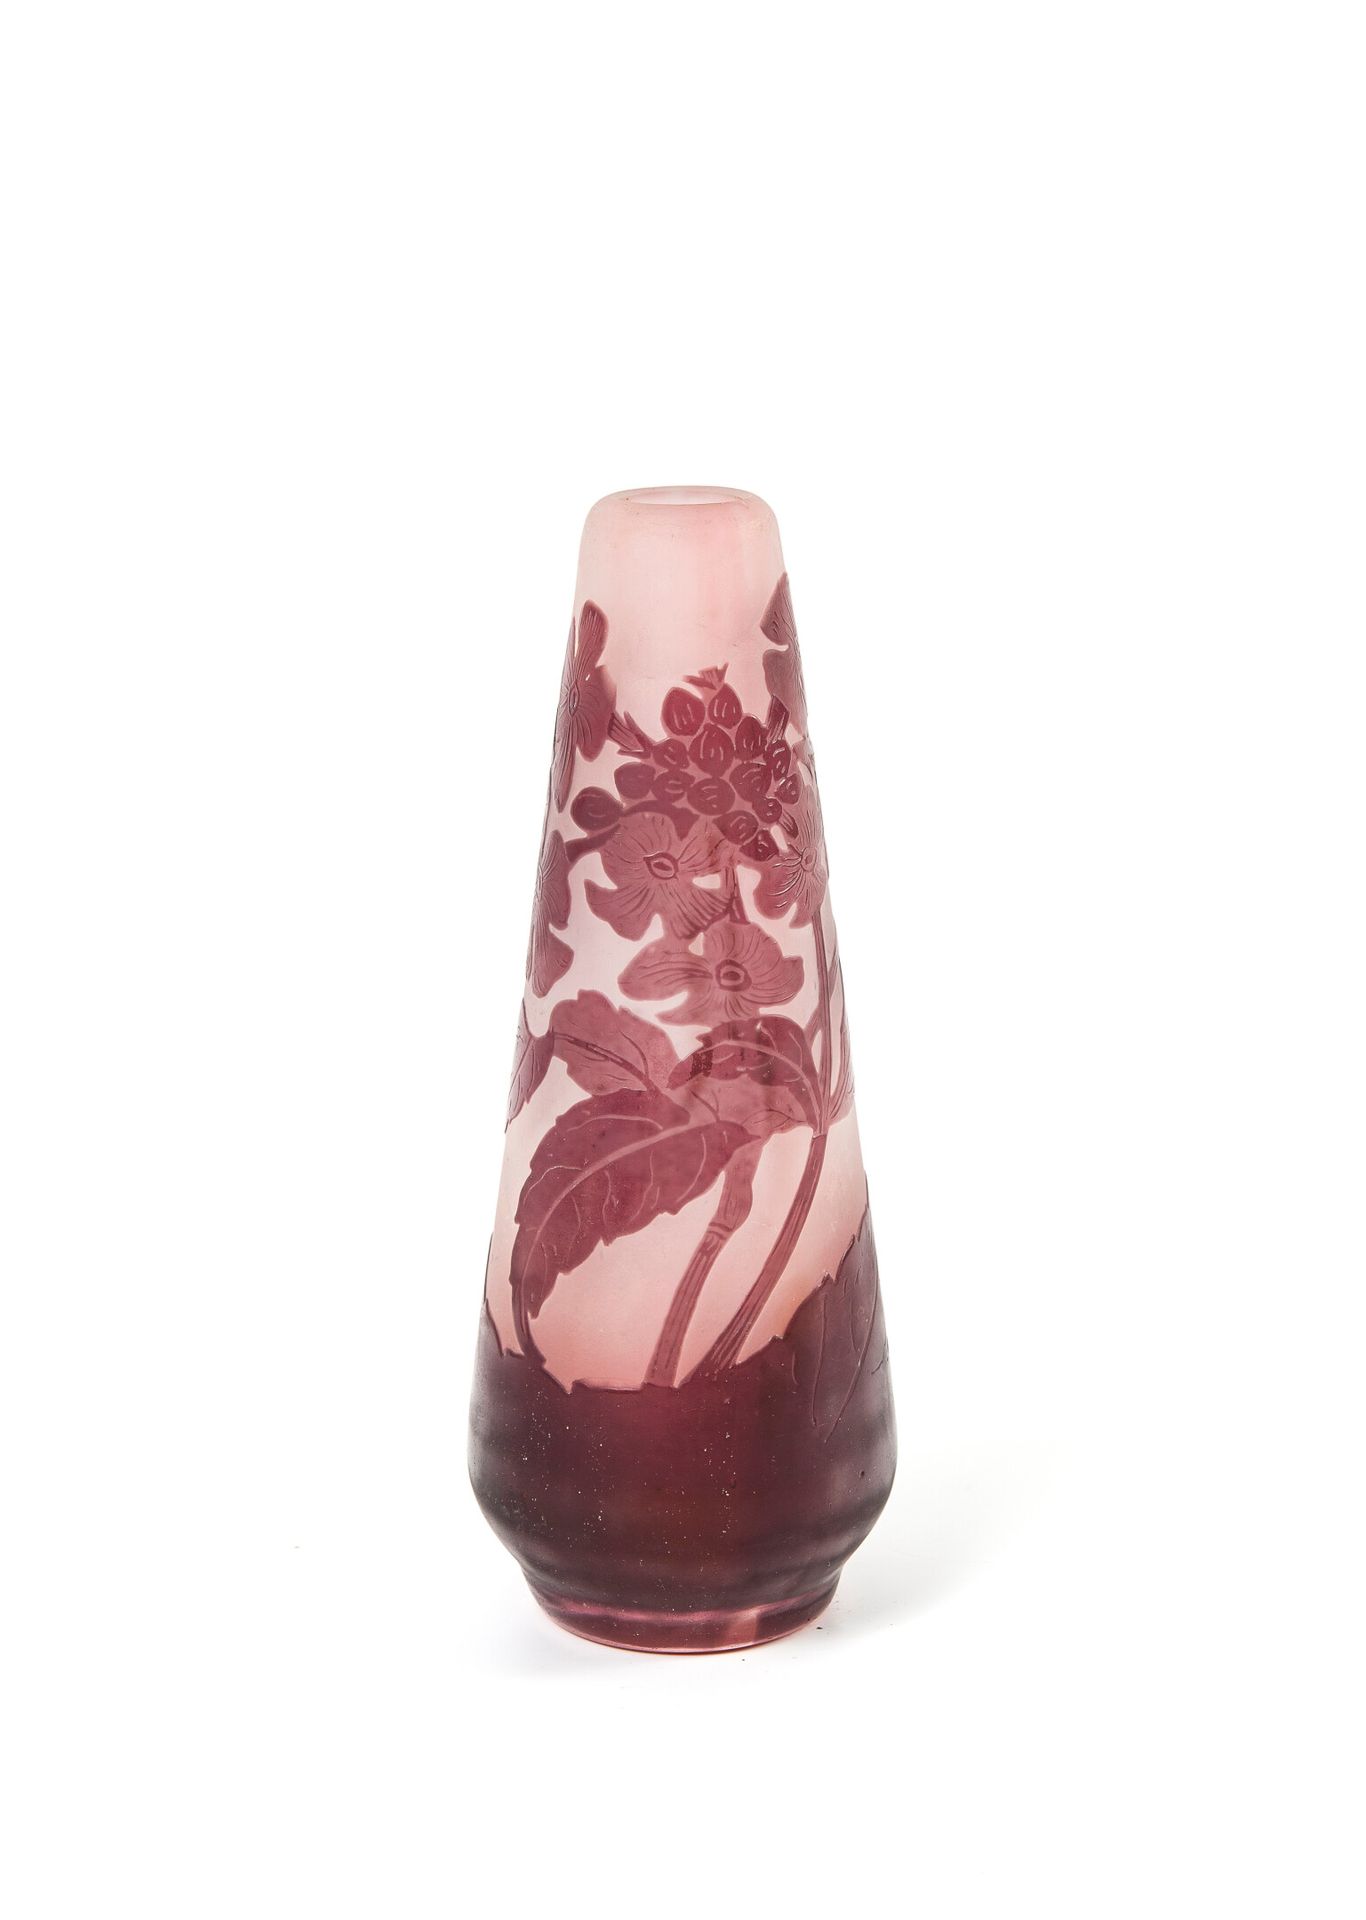 ÉTABLISSEMENTS GALLÉ 小的截顶锥状花瓶，有一个轻微的脚跟。

在粉白色背景的紫色内衬玻璃中的证明。

饰以酸蚀法的月亮浮雕。

签名。

H&hellip;